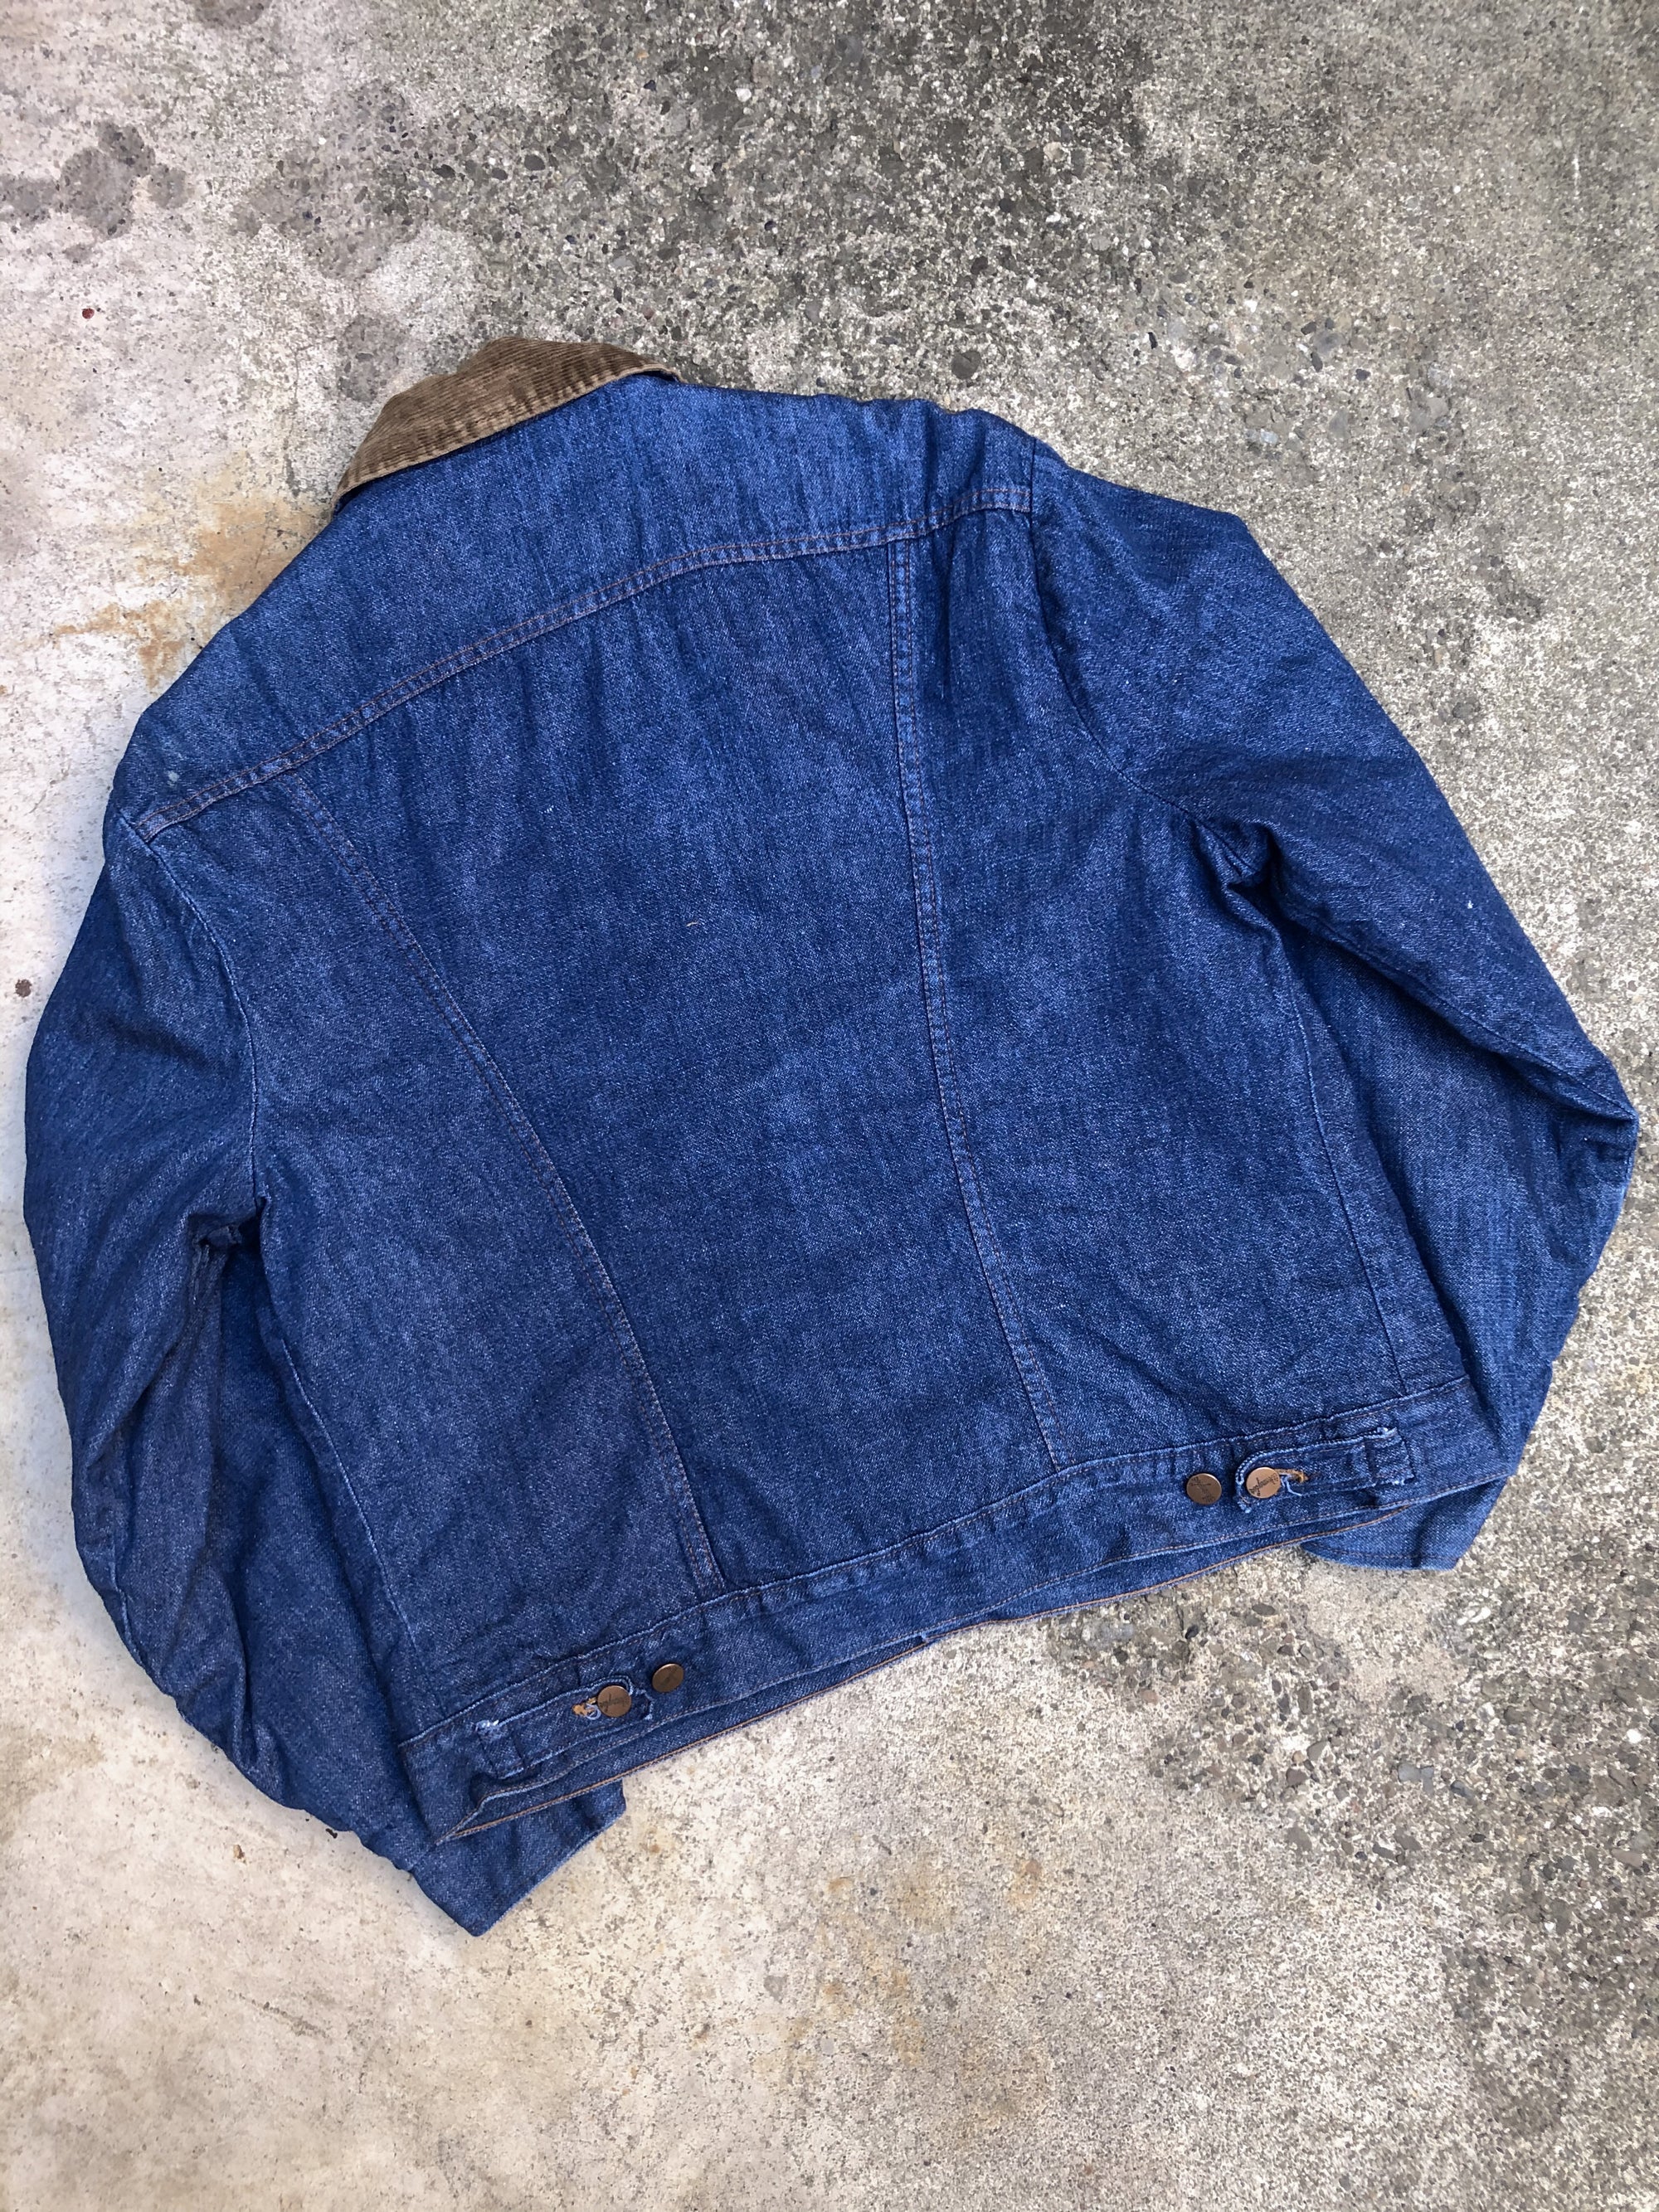 1980s Wrangler Corduroy Collar Blue Denim Sherpa Lined Work Jacket (M)